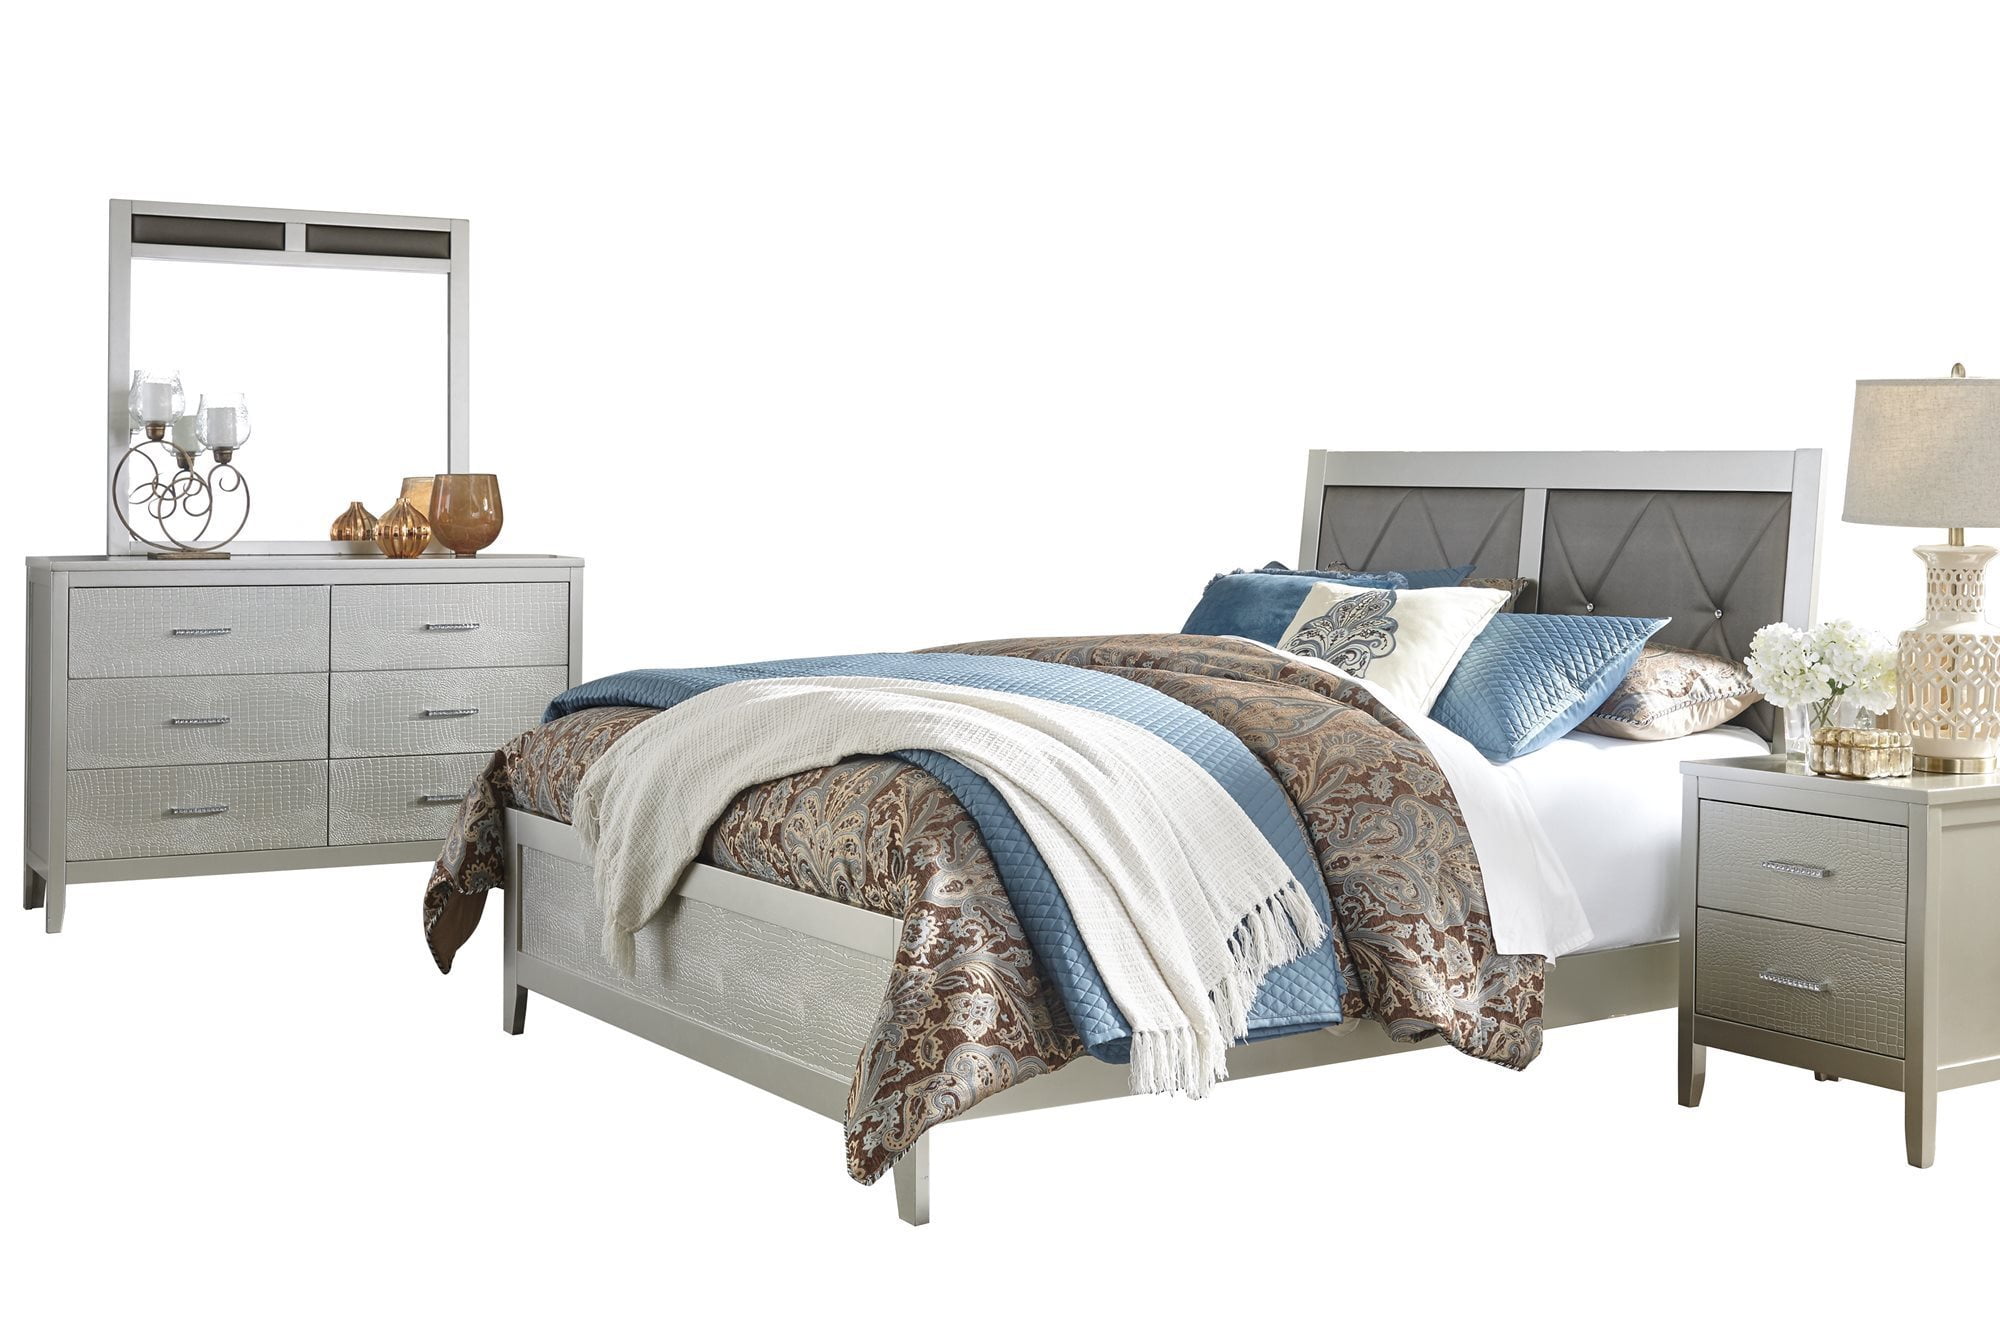 Ashley Furniture Olivet 4 Pc Bedroom Set Full Panel Bed 1 Nightstand Dresser Mirror Silver Walmart Com Walmart Com